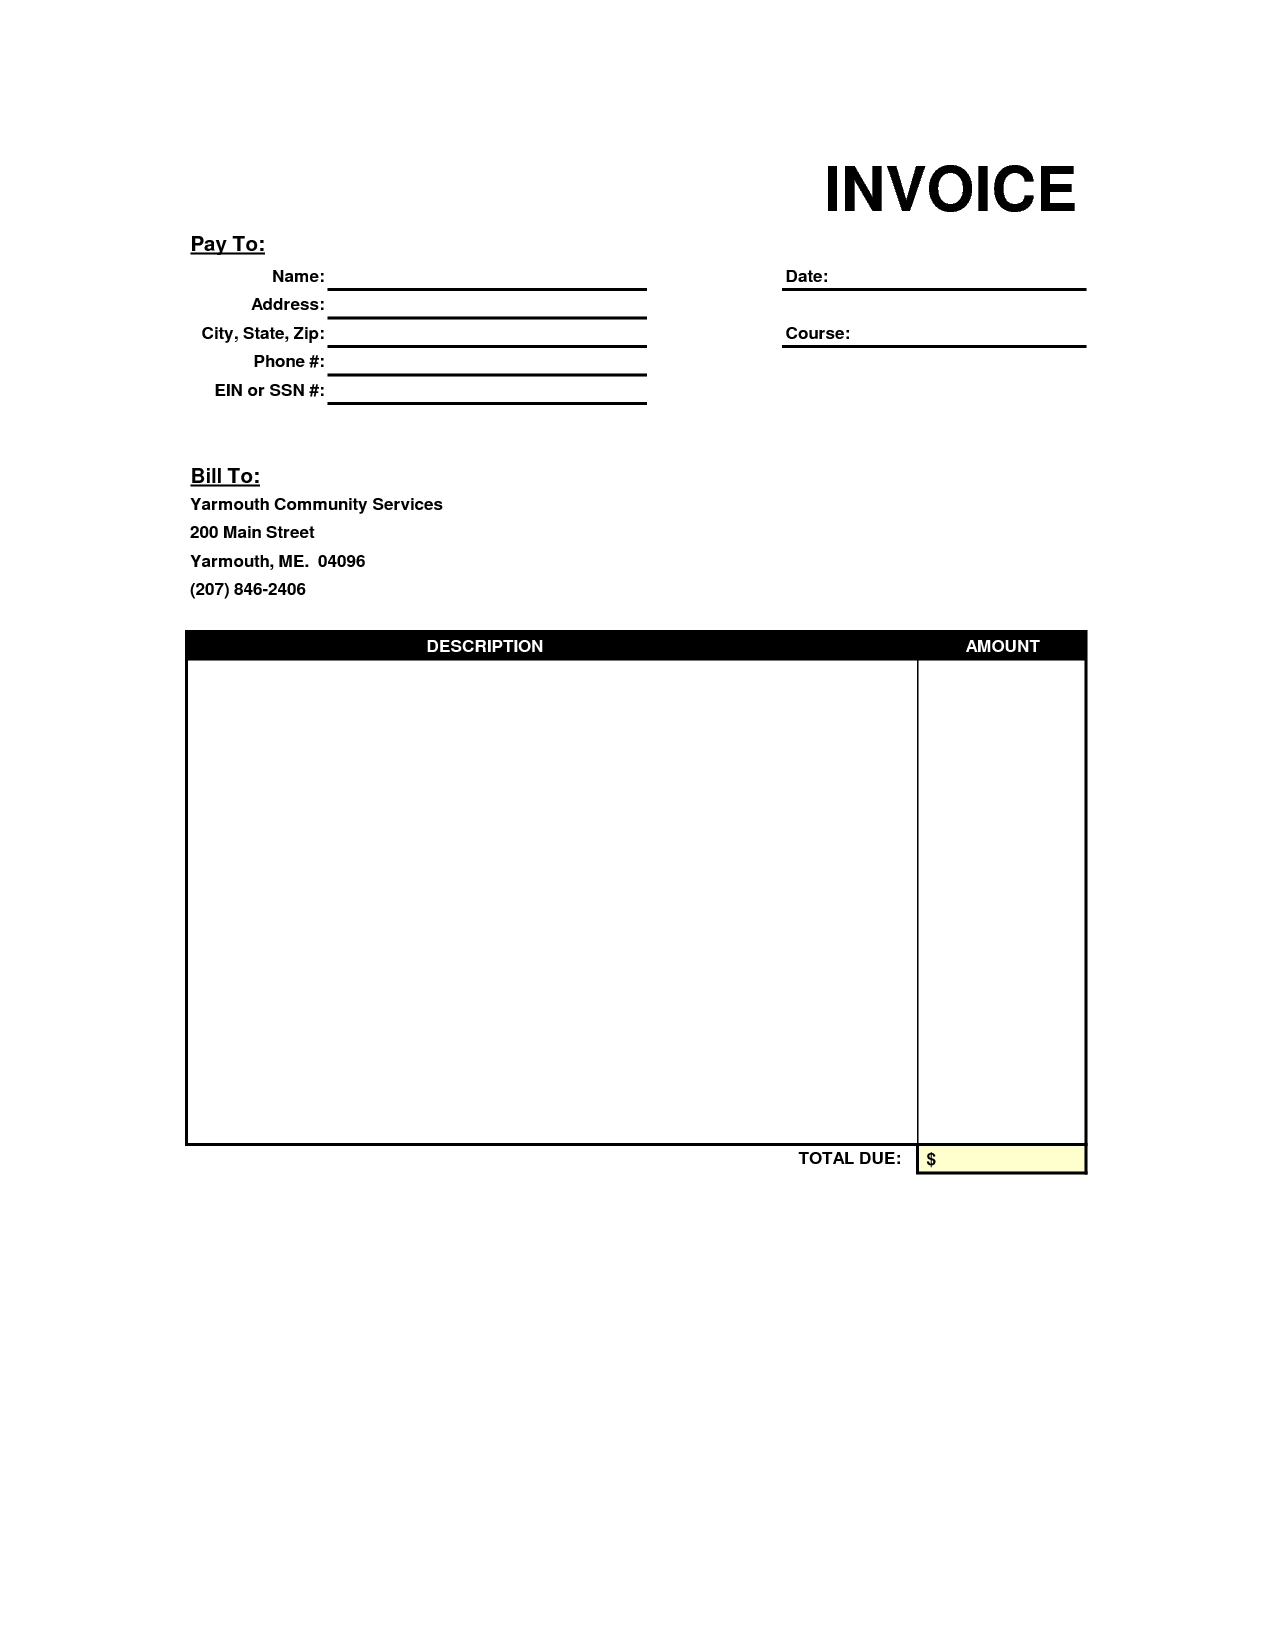 blank invoice template blank invoice template for an invoice